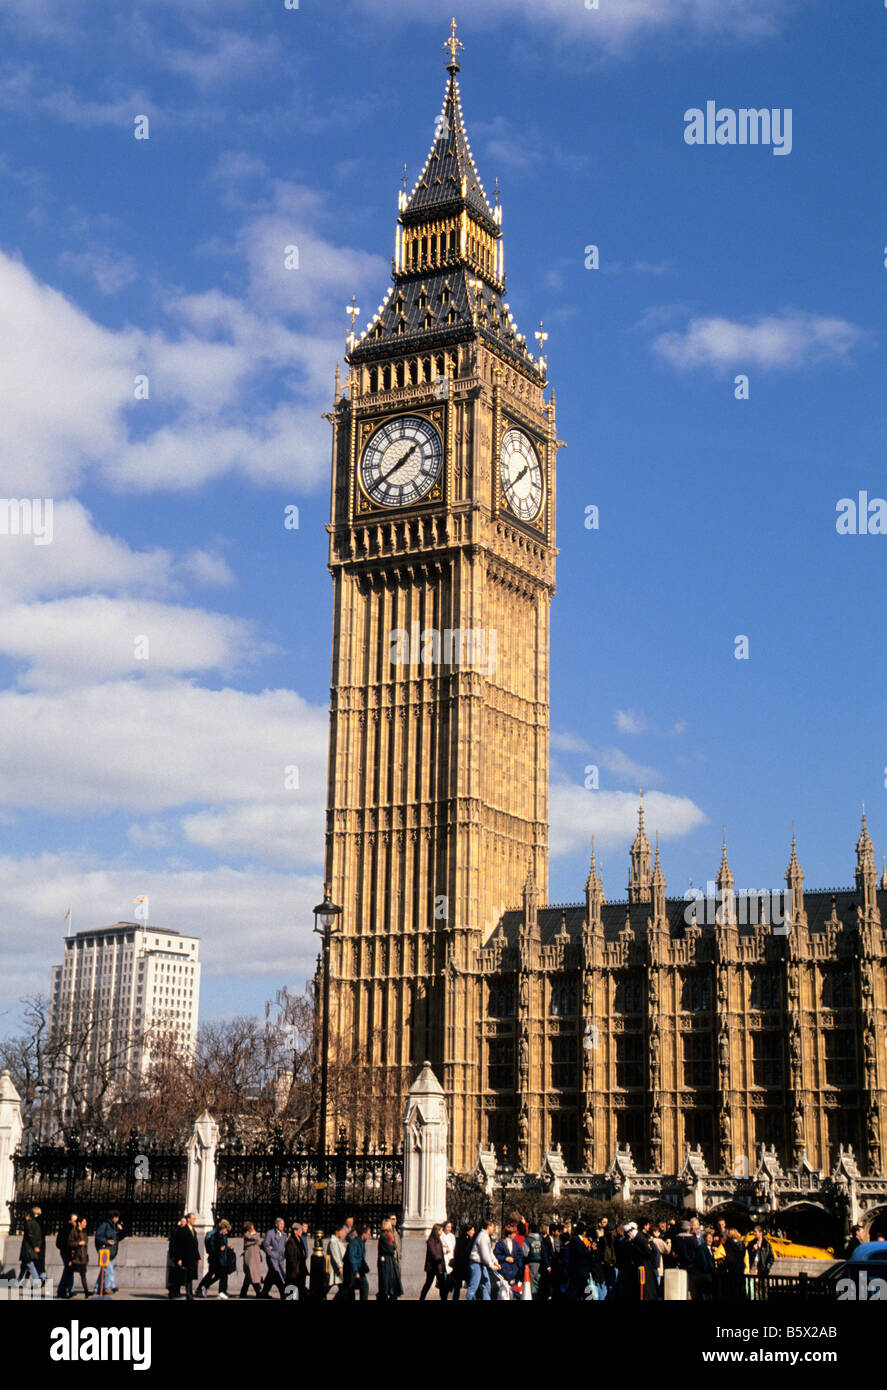 Big Ben Clock Tower, St. Stephen's Tower oder Elizabeth Tower, London, Großbritannien, England. Historischer Londoner Parliament Square, Palace of Westminster. Stockfoto